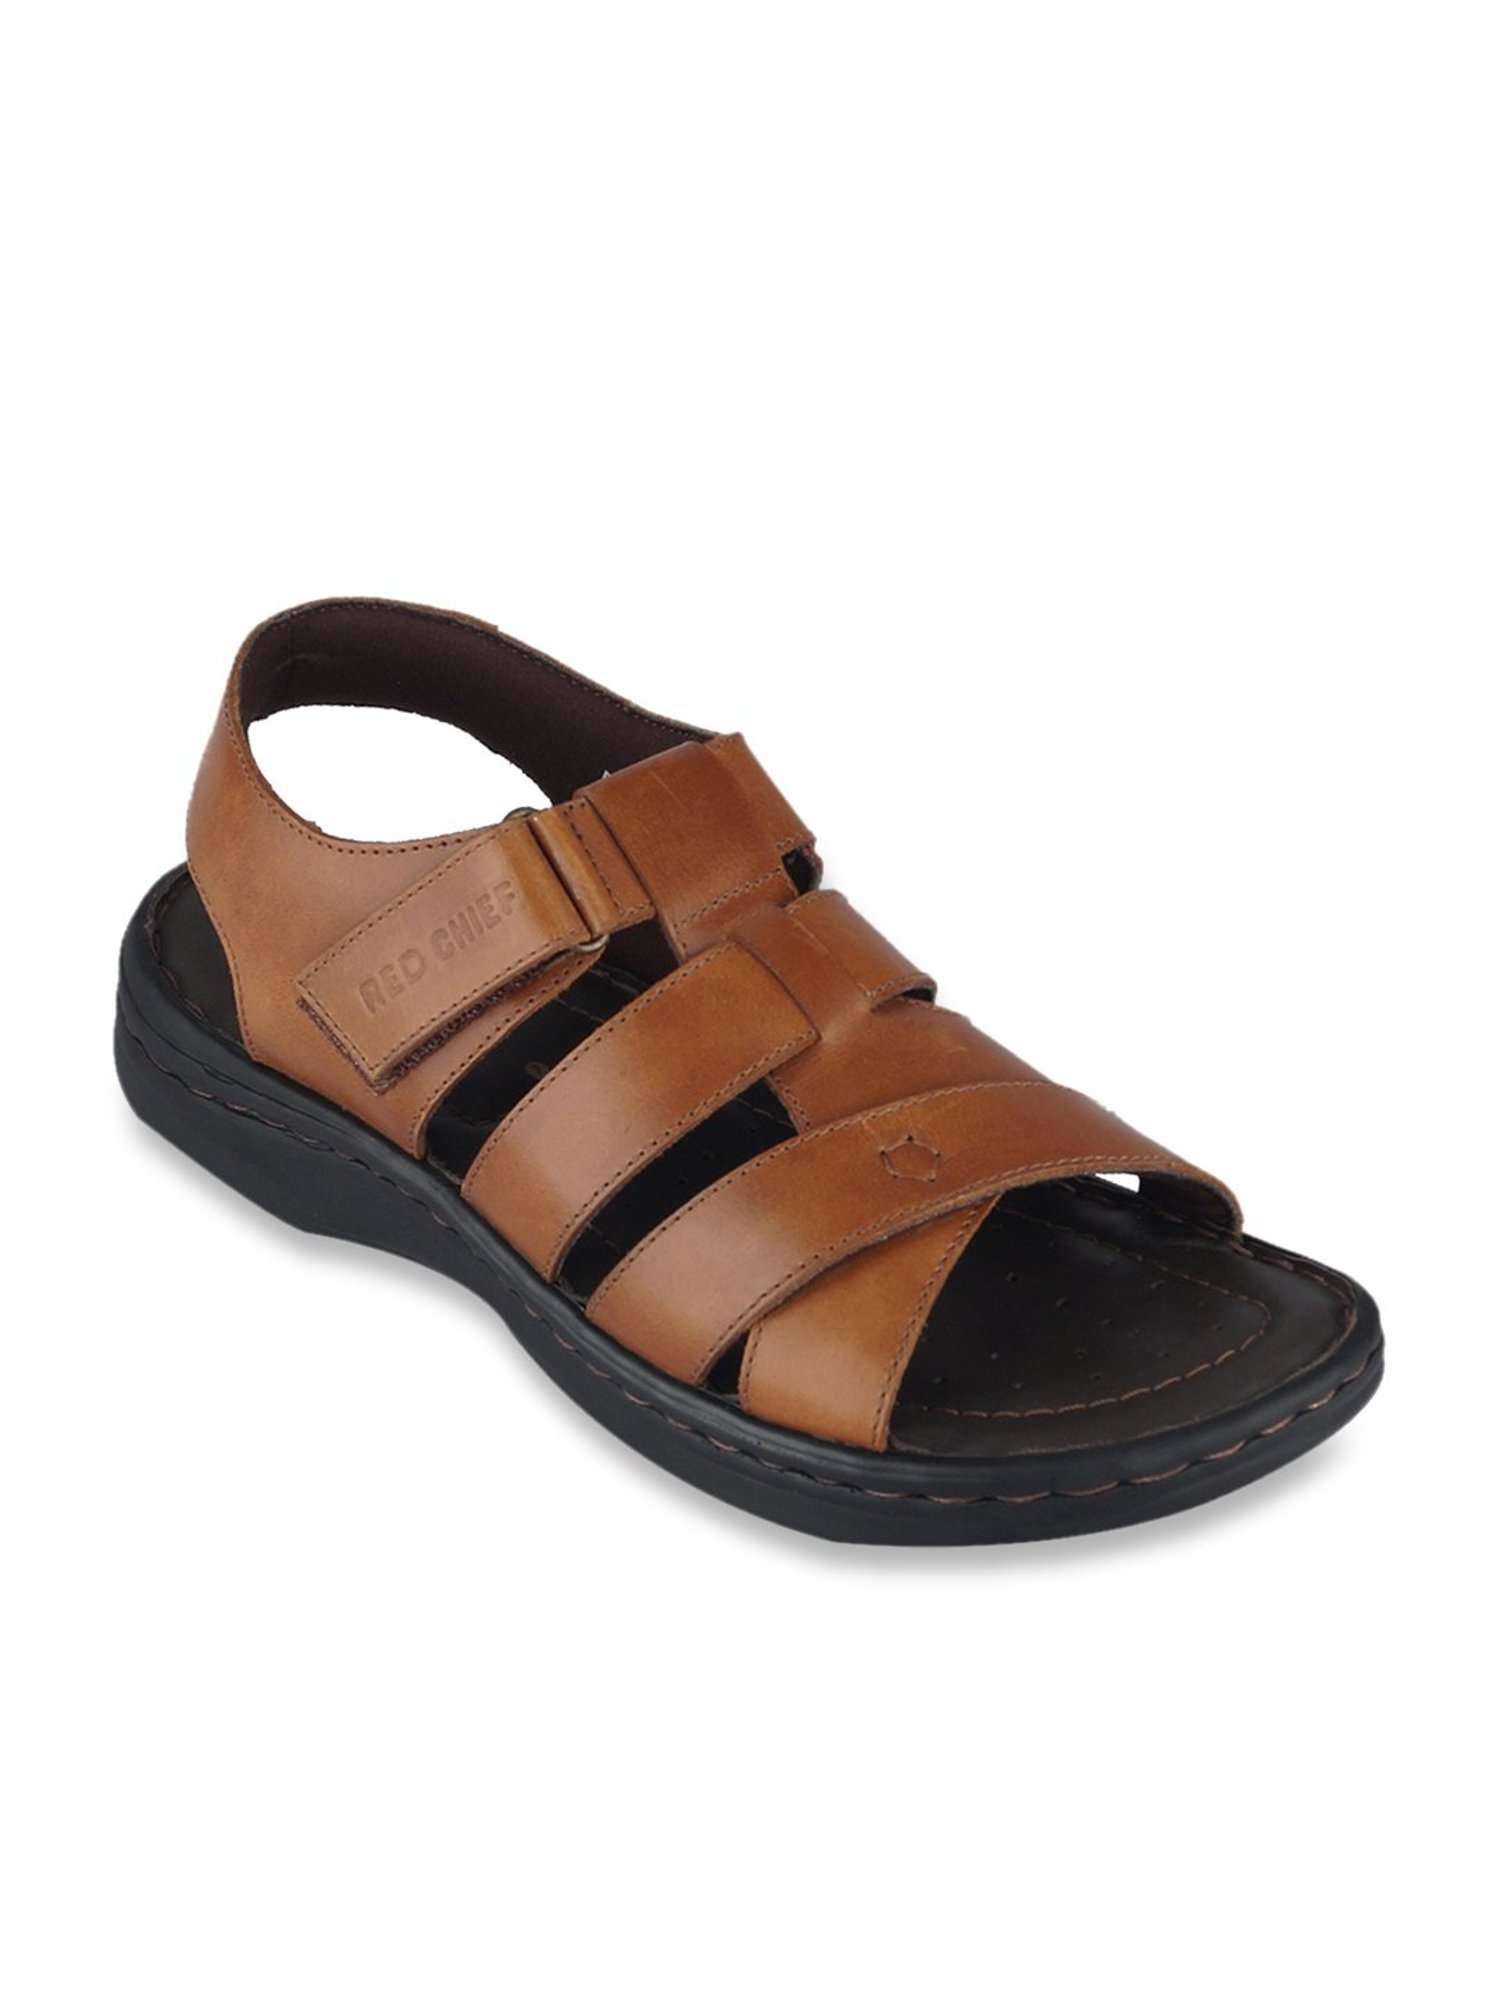 Buy Black Heeled Sandals for Women by GLOBAL STEP Online | Ajio.com